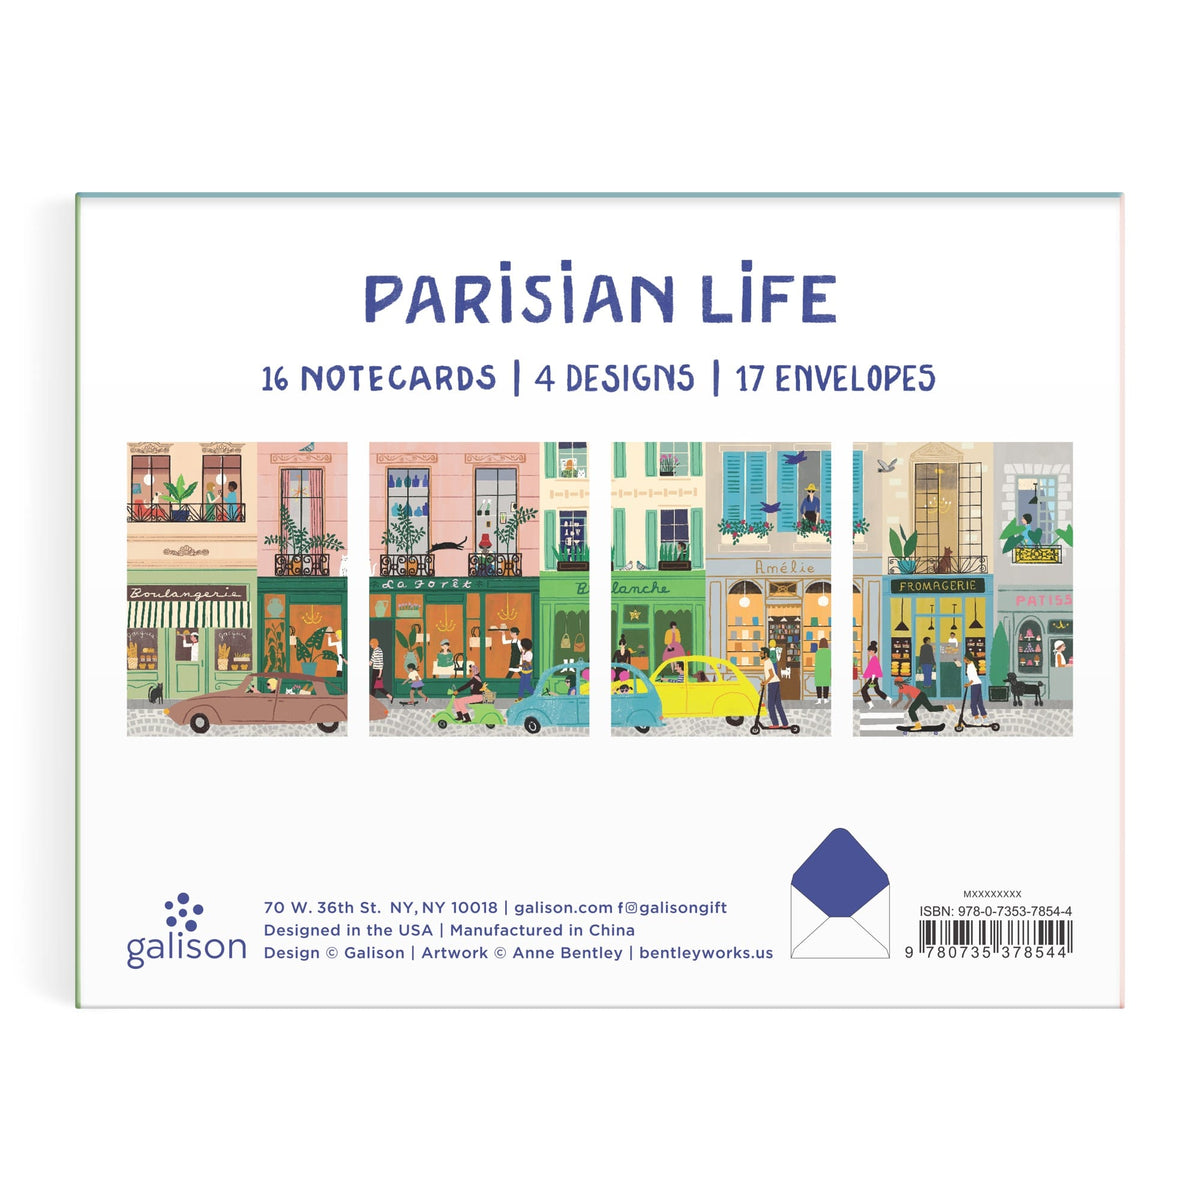 the parisian life